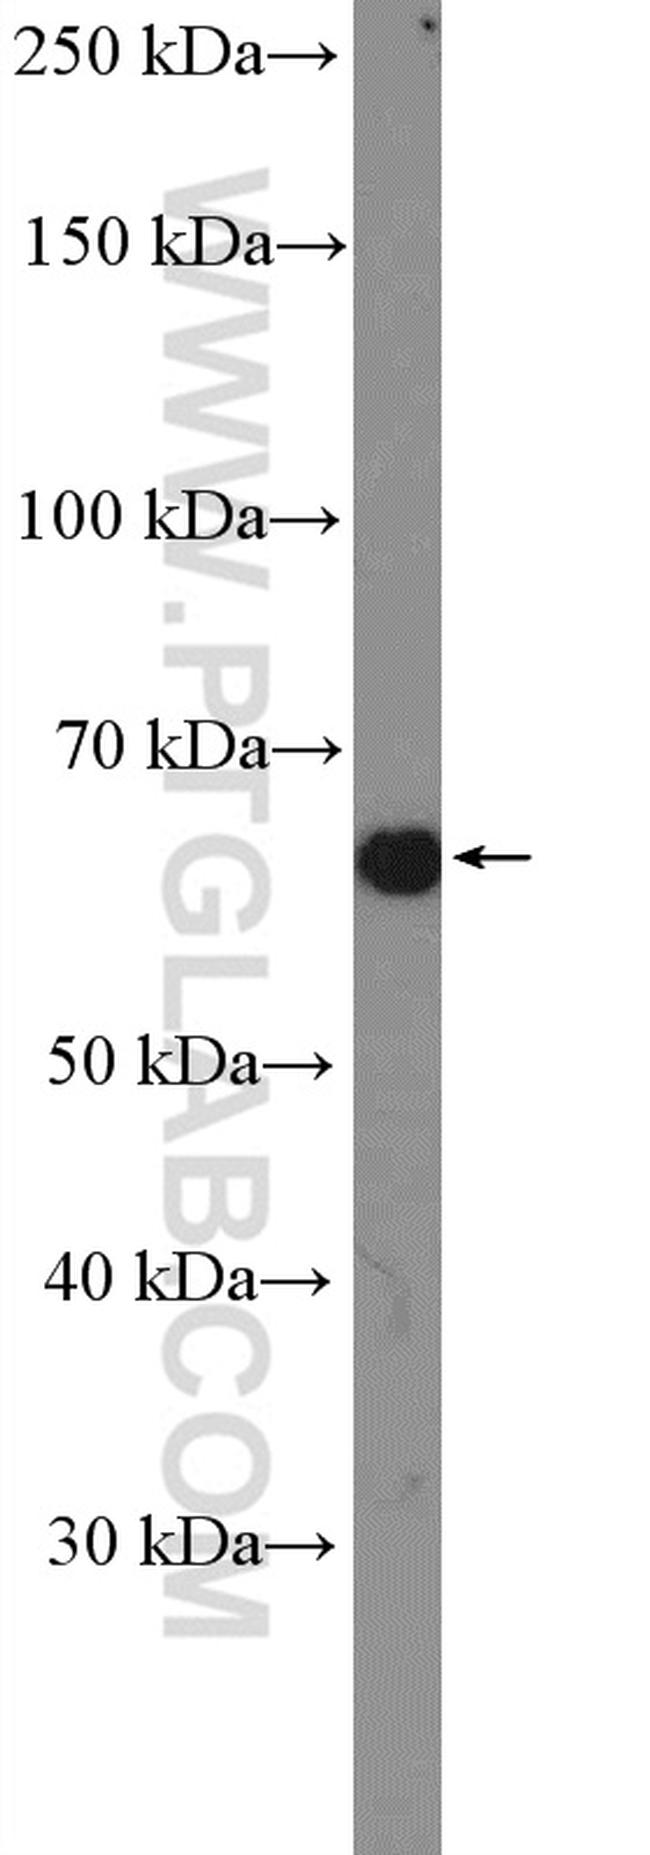 PDLIM5 Antibody in Western Blot (WB)